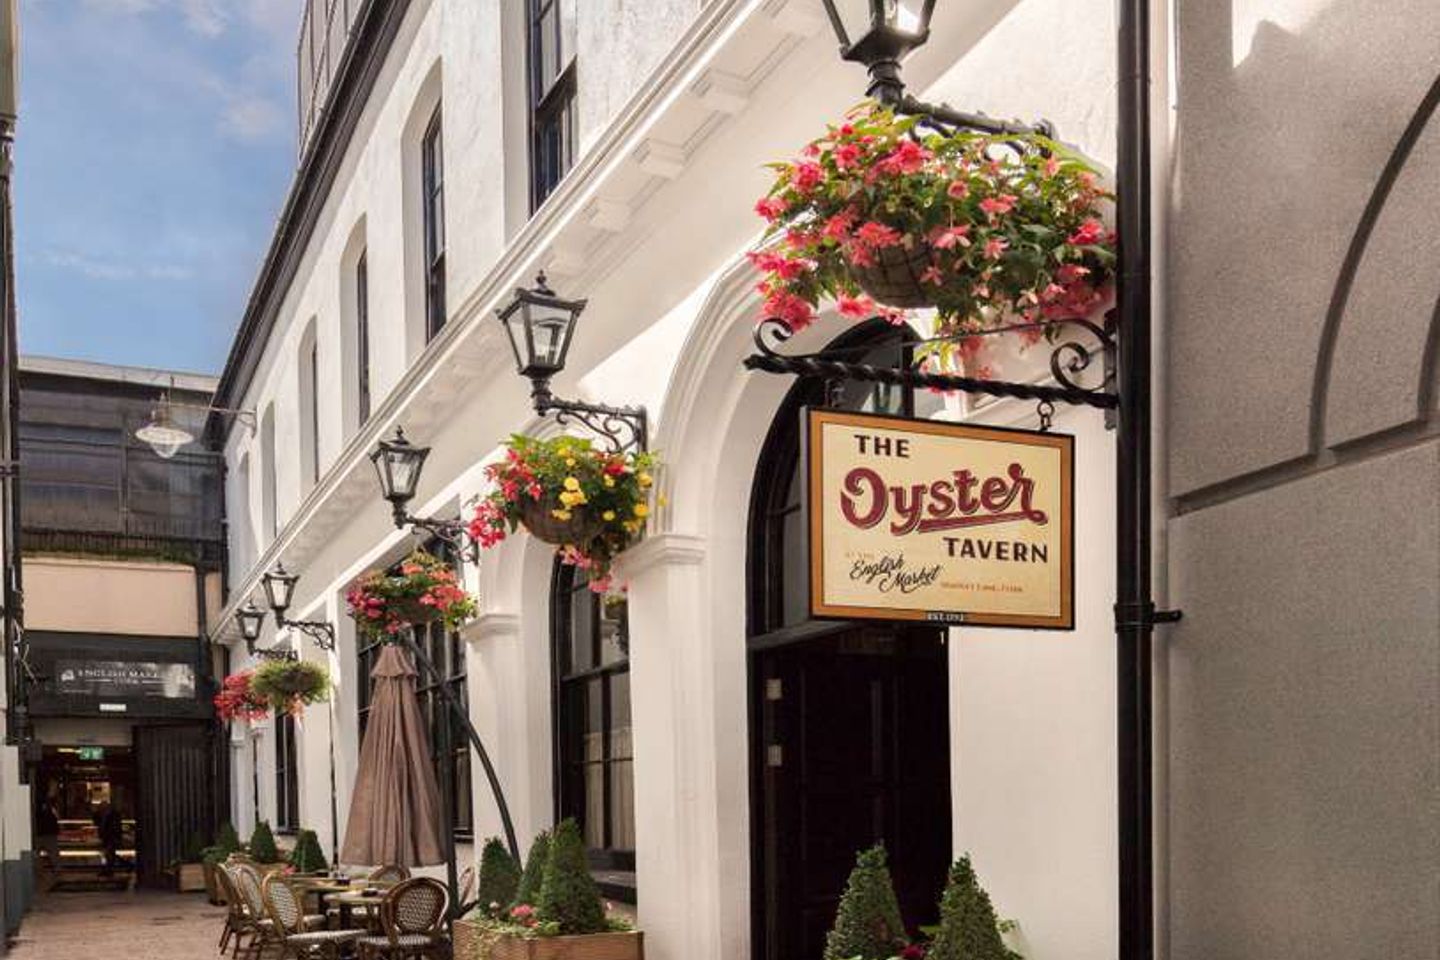 The Oyster Tavern, The Capitol, St Patrick Street, Cork City, Co. Cork